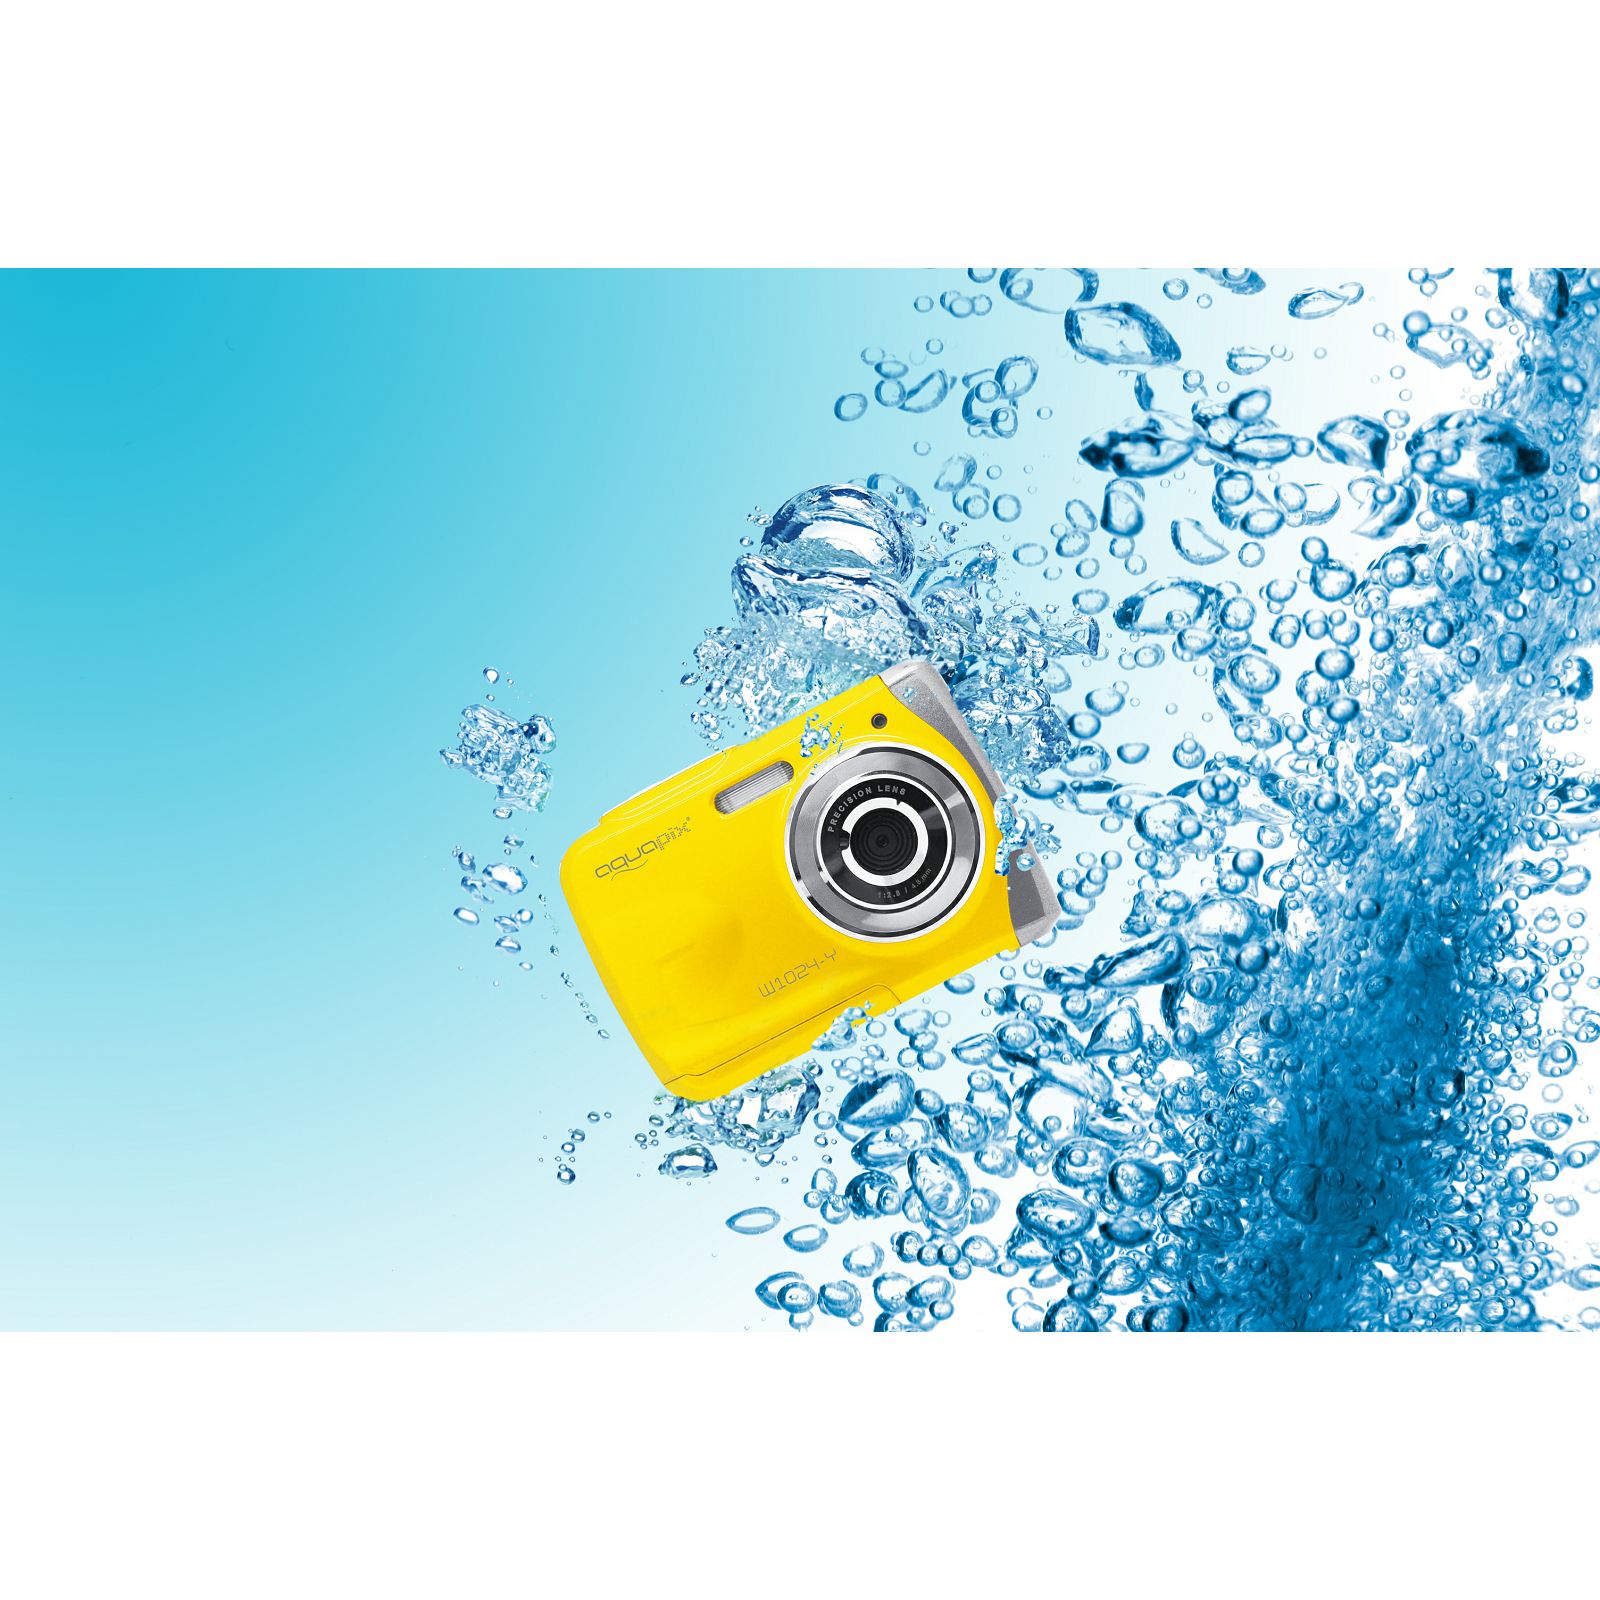 Aquapix W1024-Y "Splash" Yellow (10014) 10MP 4x zoom LCD podvodni vodonepropusni digitalni fotoaparat do 3m Waterproof digital camera